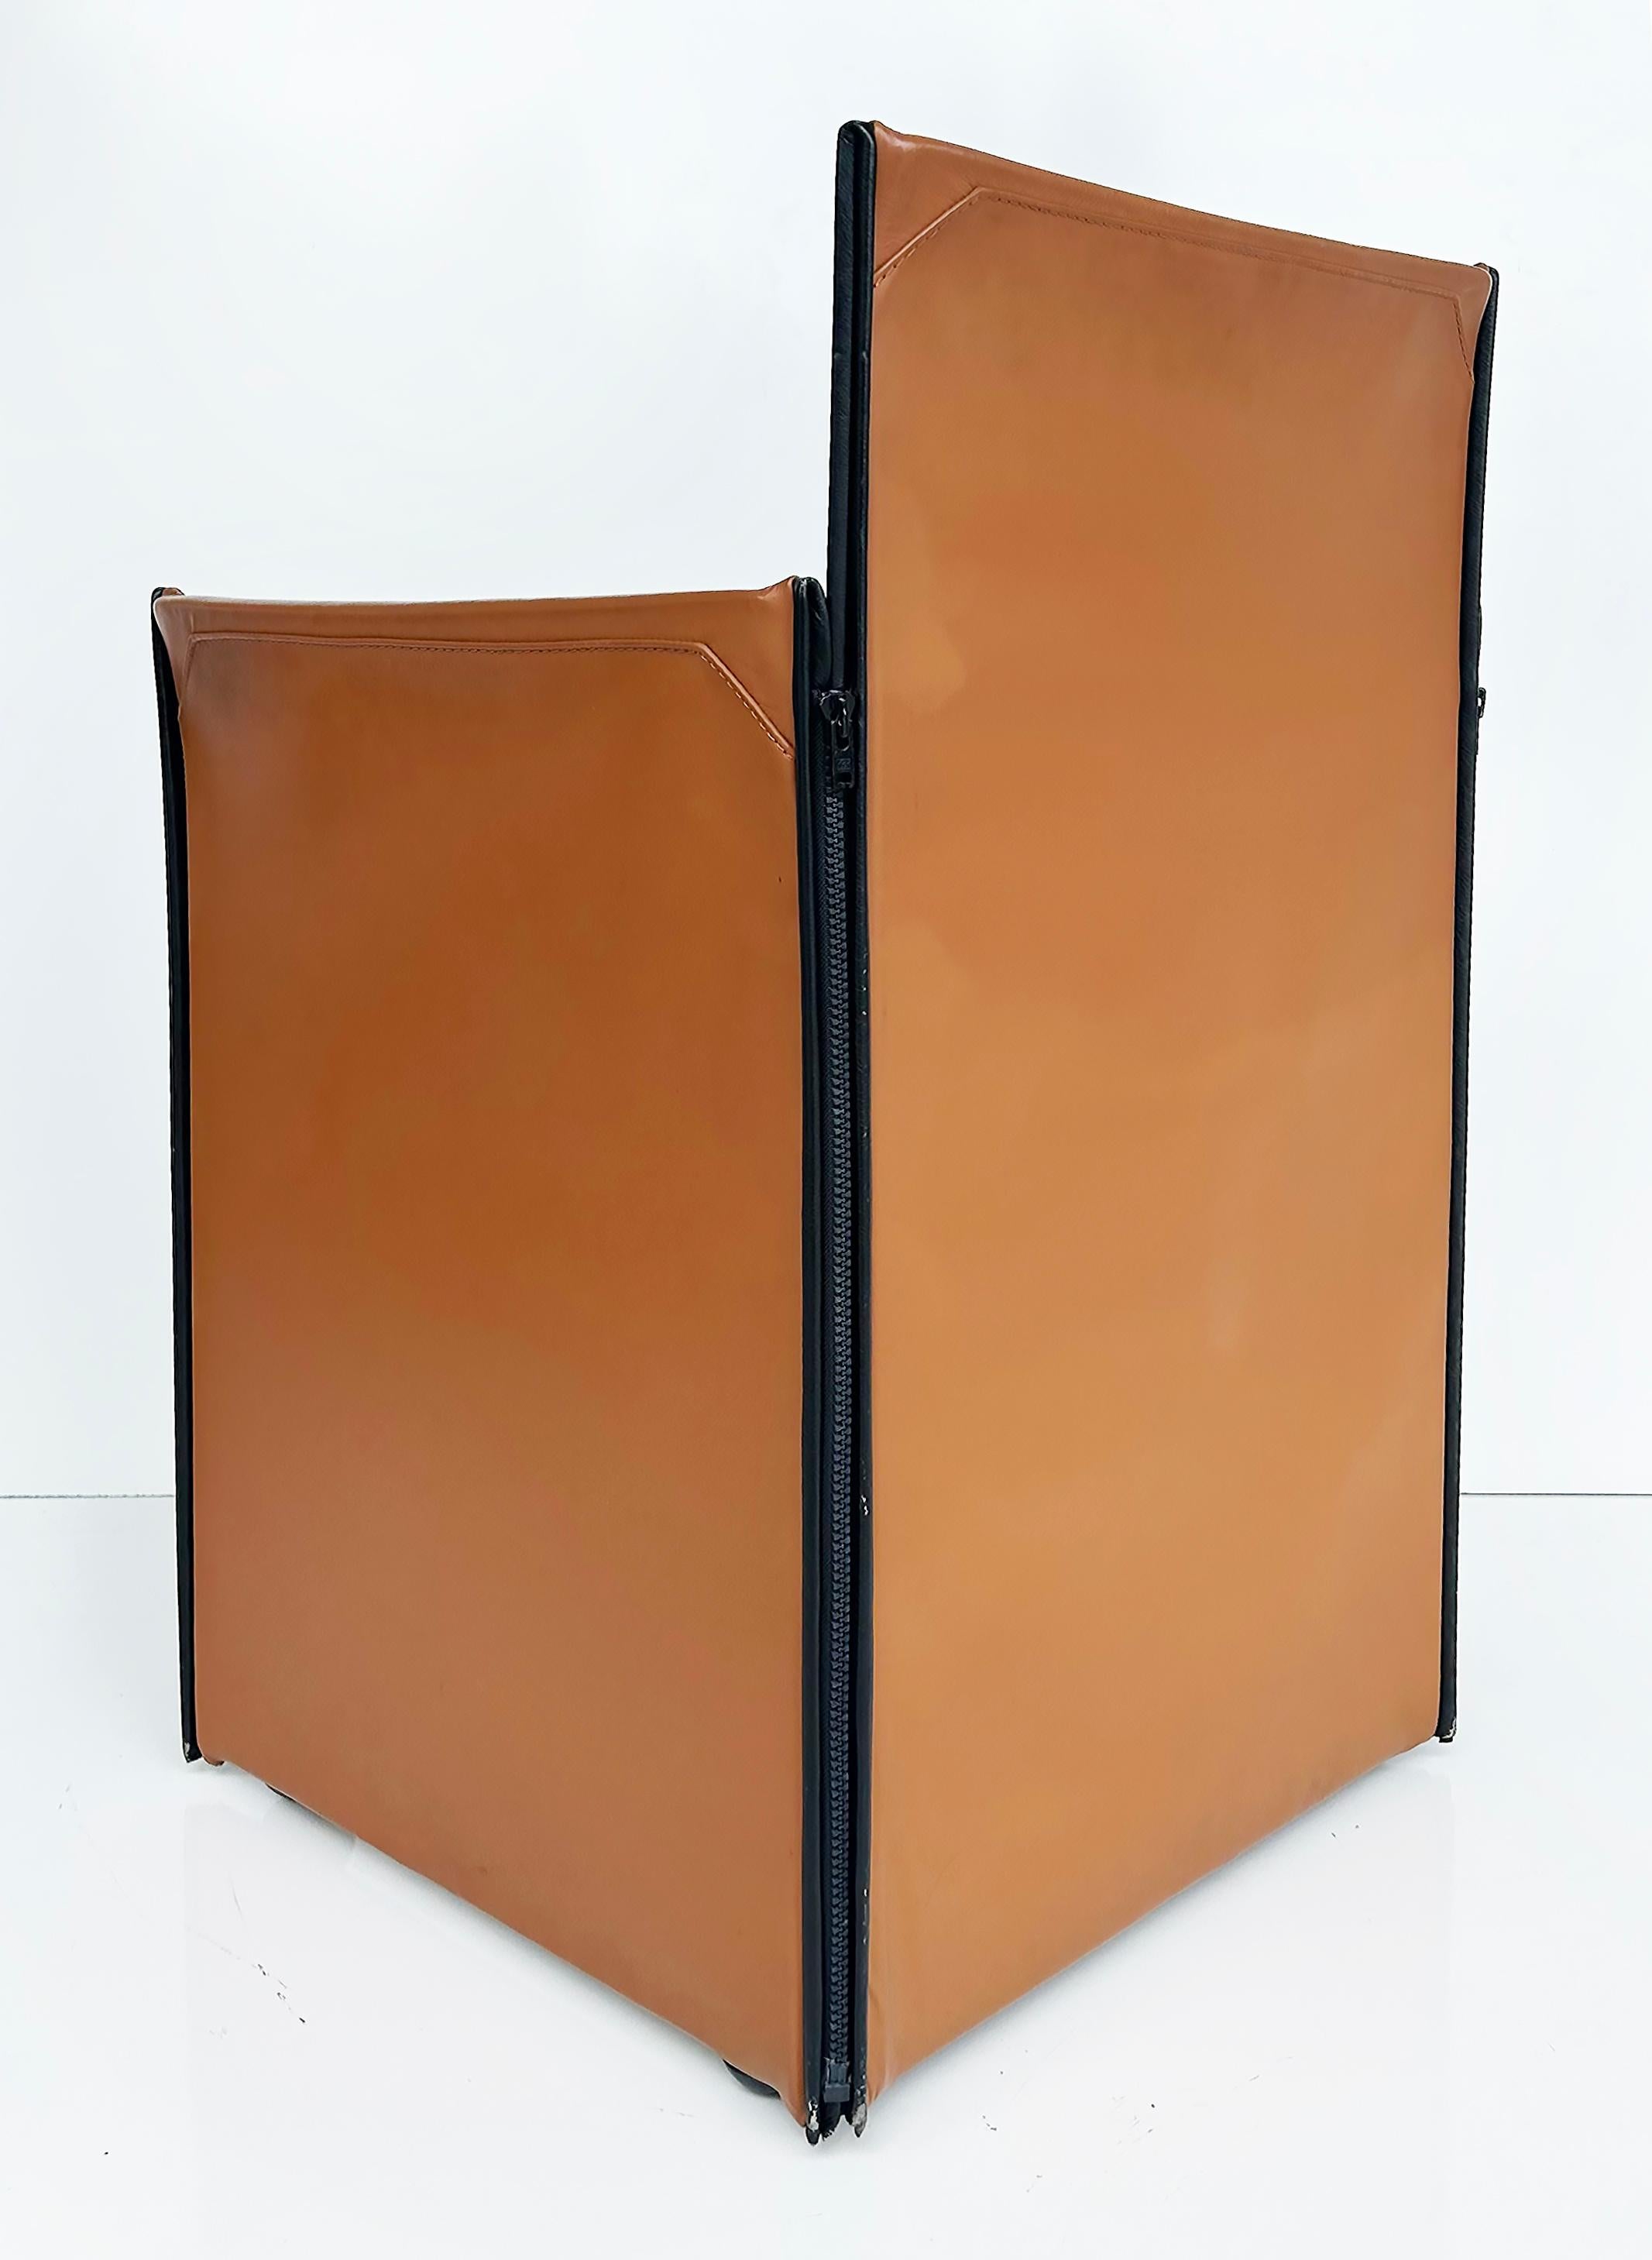 Mario Bellini Cassina Italian 401 Break Leather Armchairs, 1980s Pair For Sale 4